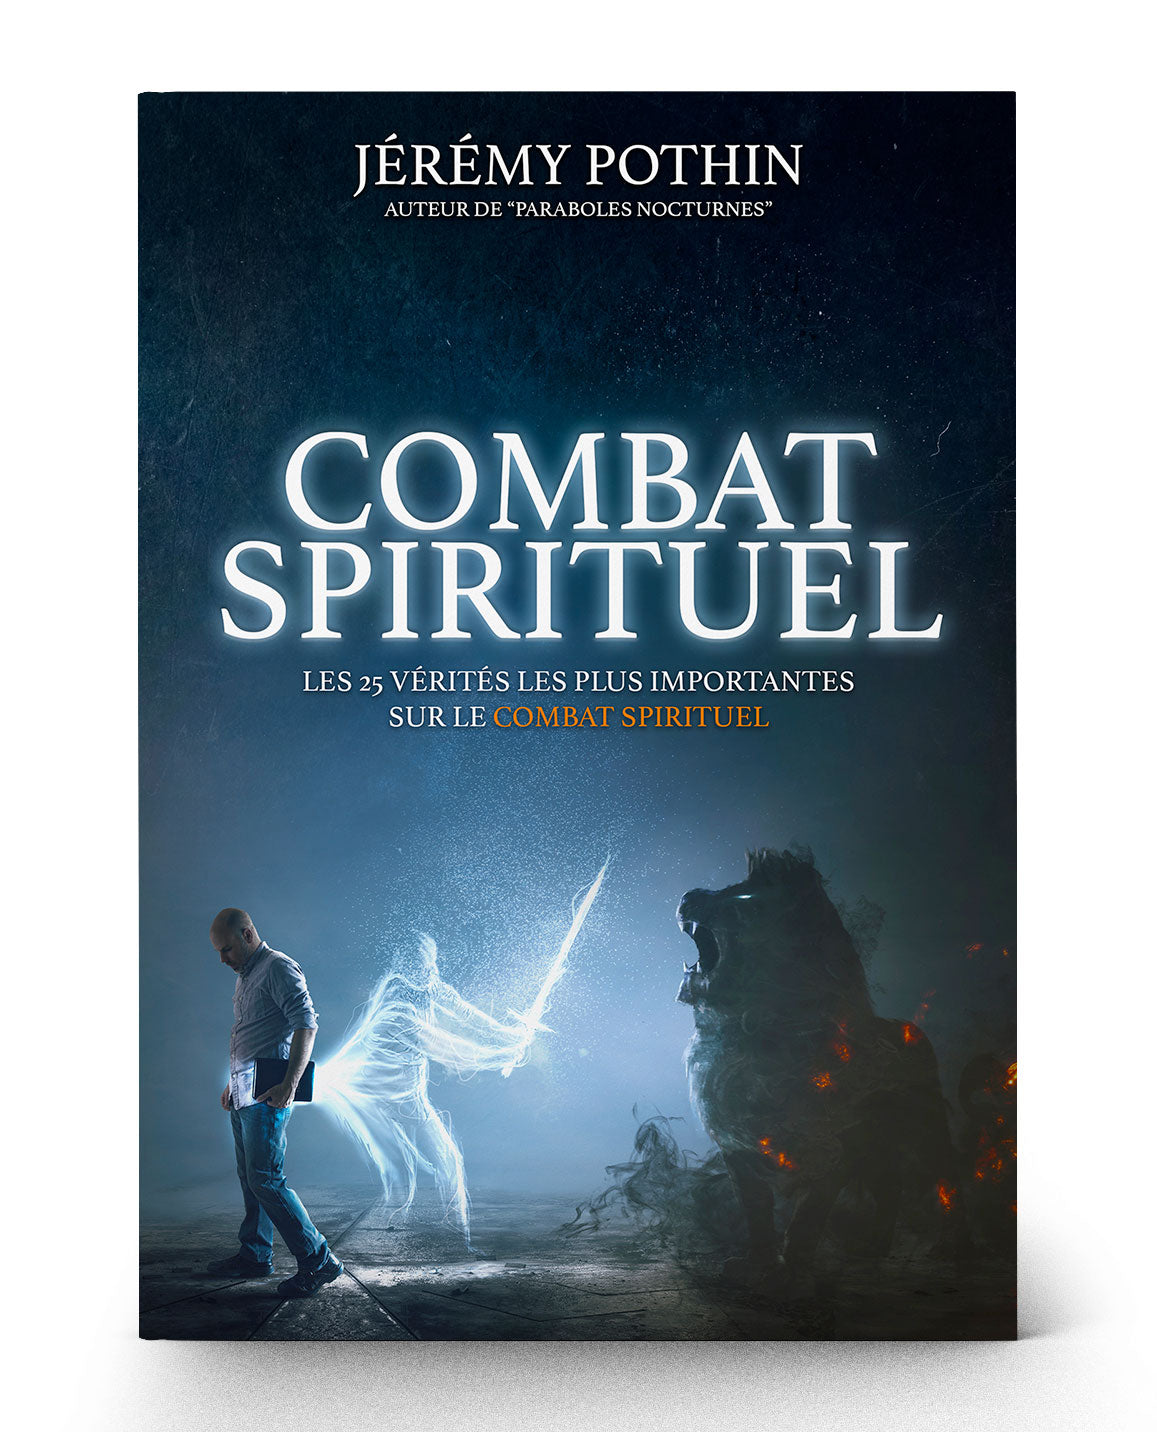 Combat spirituel | Livre